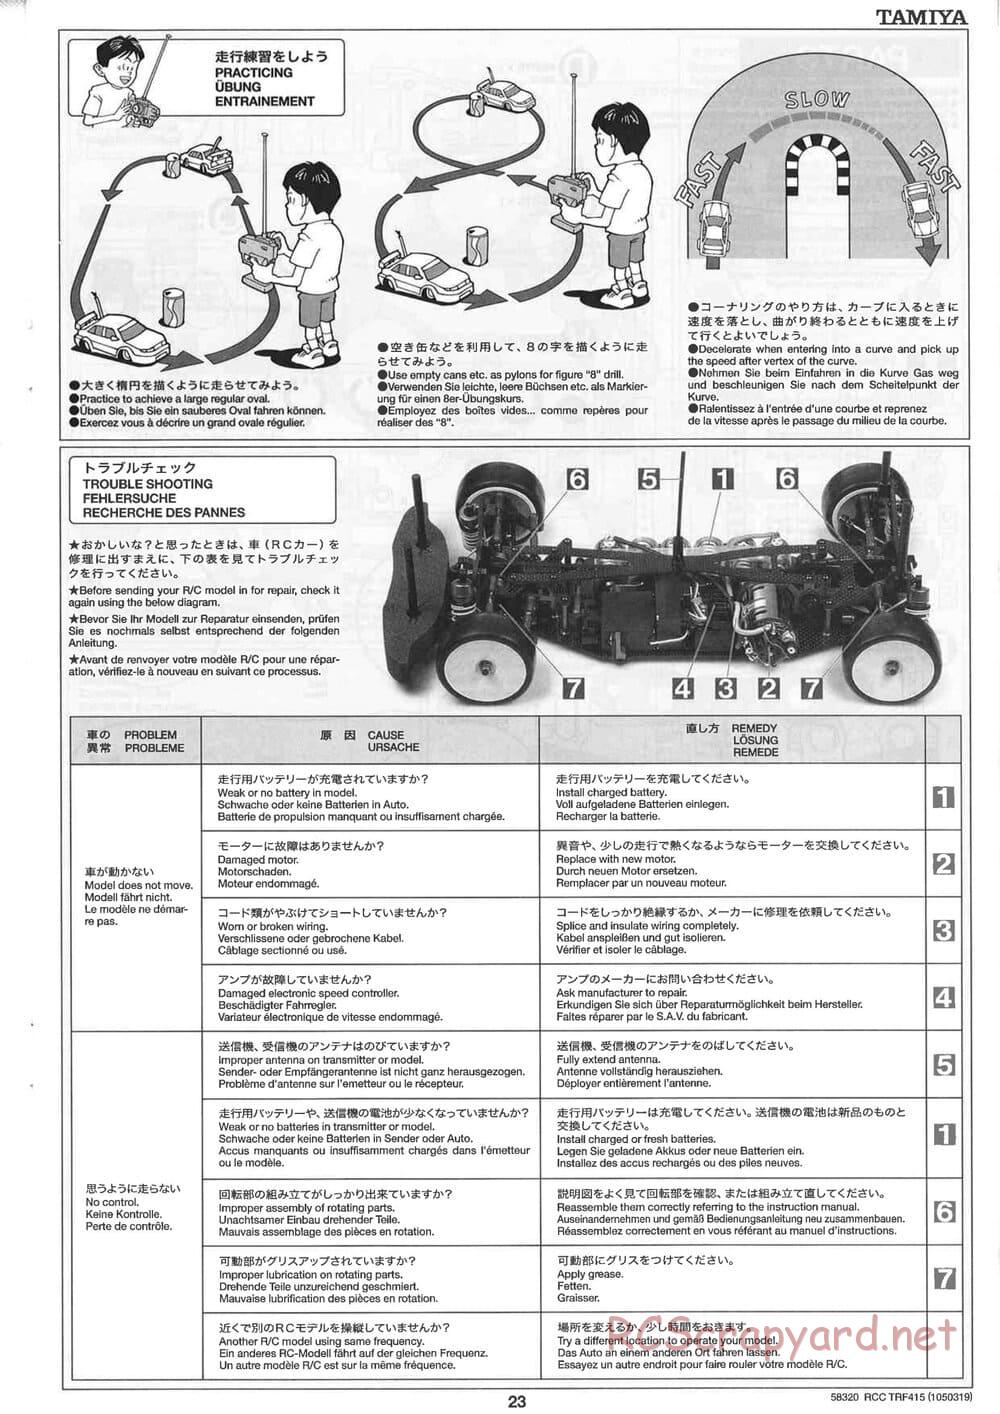 Tamiya - TRF415 Chassis - Manual - Page 23